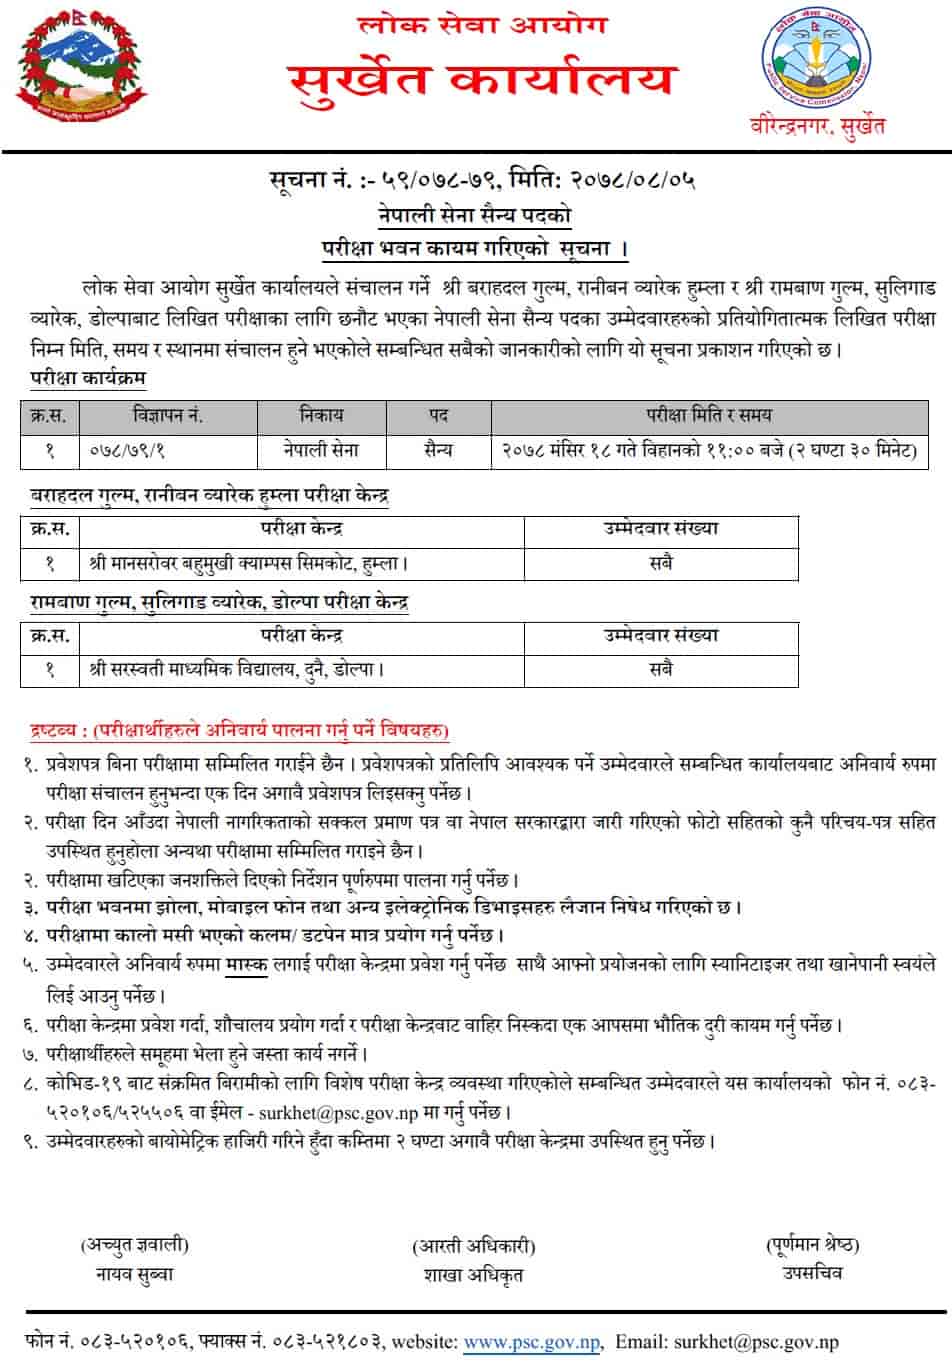 Nepal Army Sainya Post Written Exam Center Dolpa and Humla